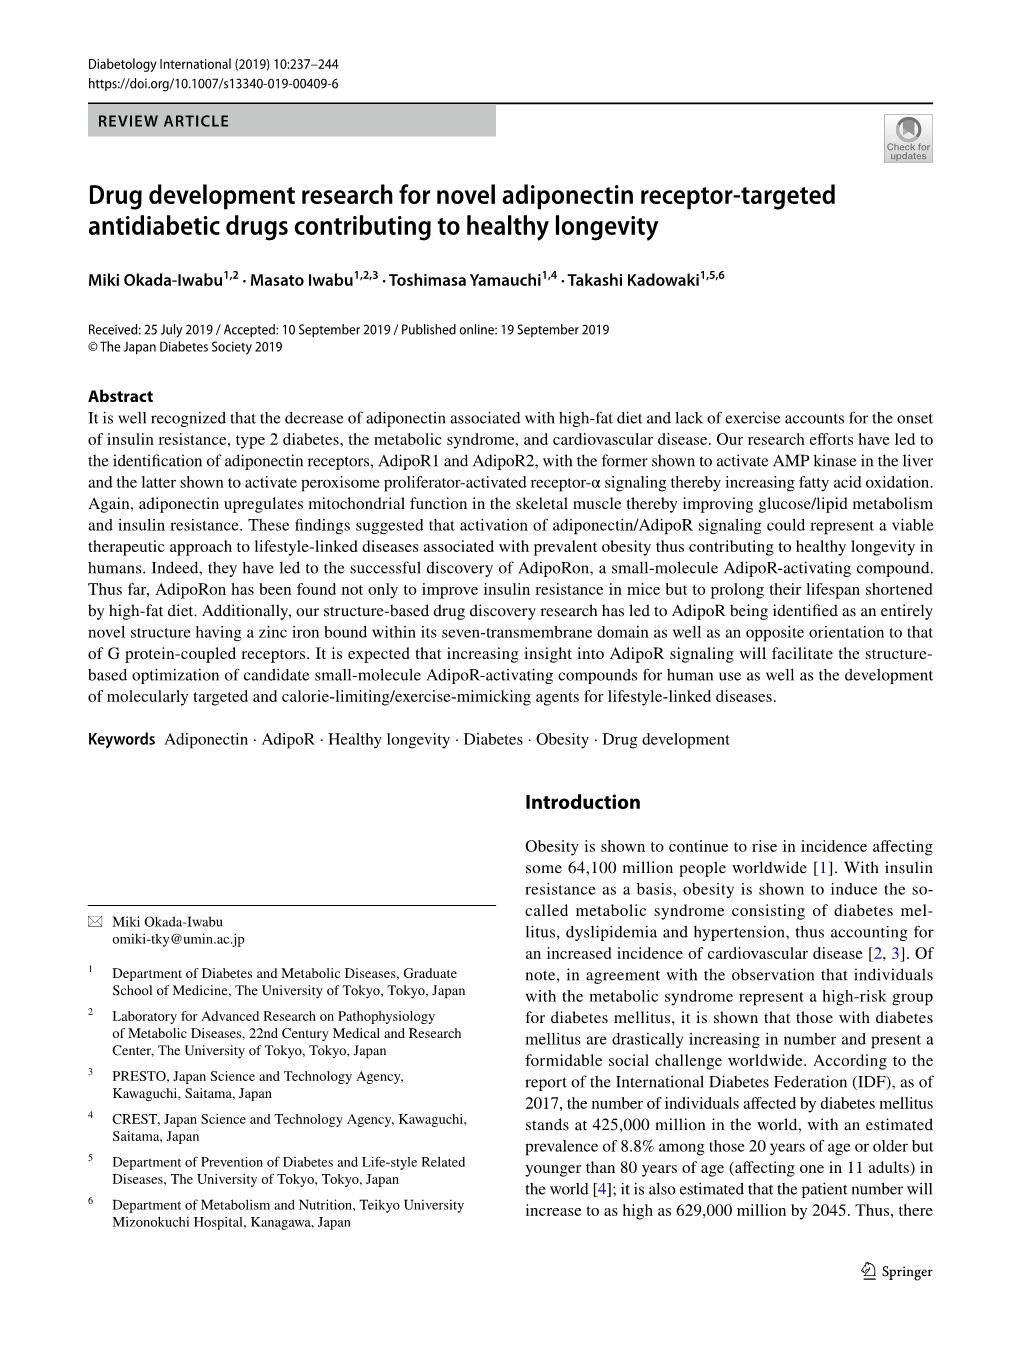 Drug Development Research for Novel Adiponectin Receptor-Targeted